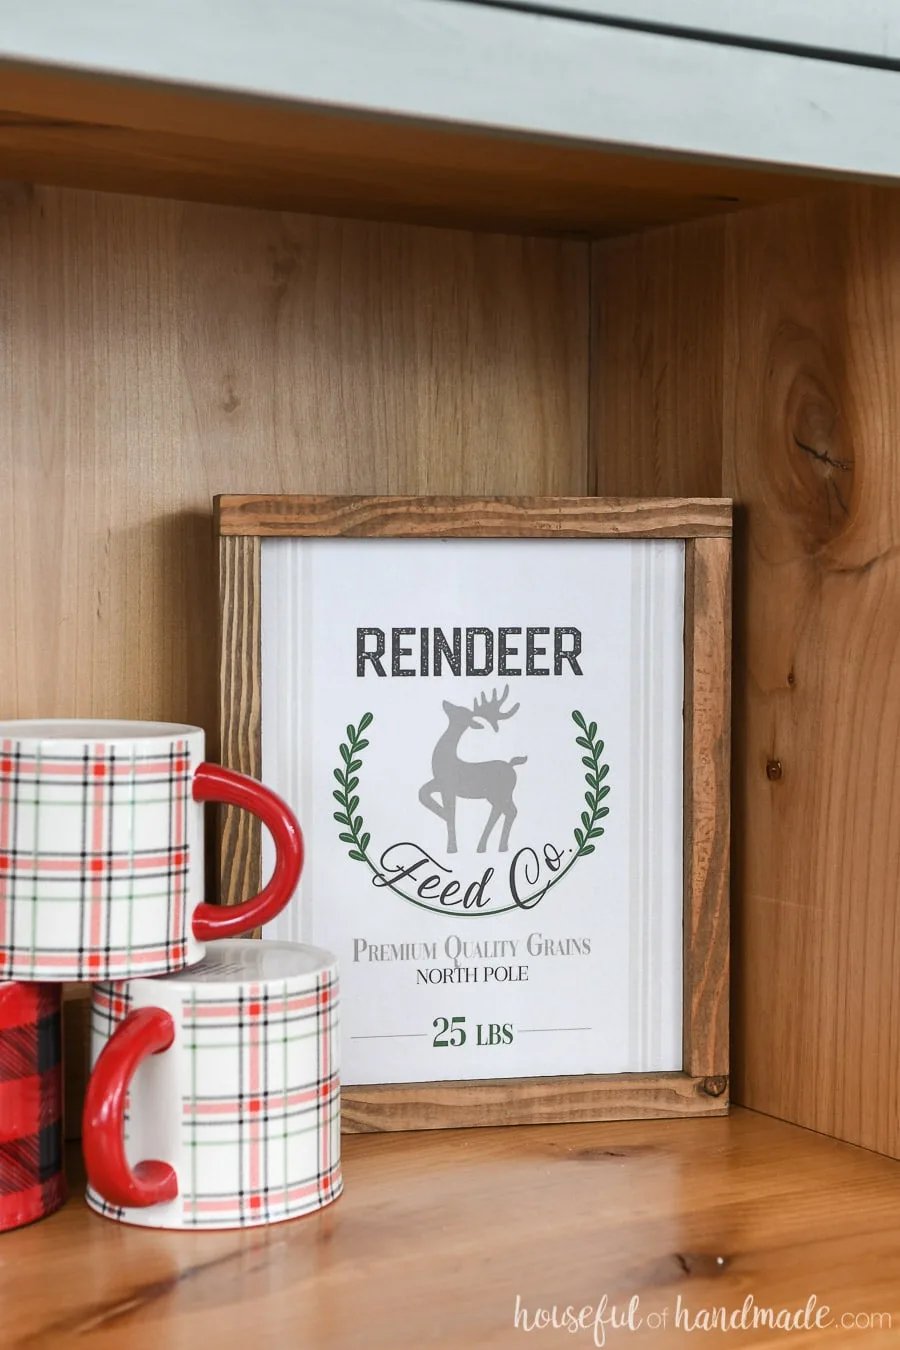 Reindeer Feed Co. printable made into easy DIY wood signs for Christmas. 